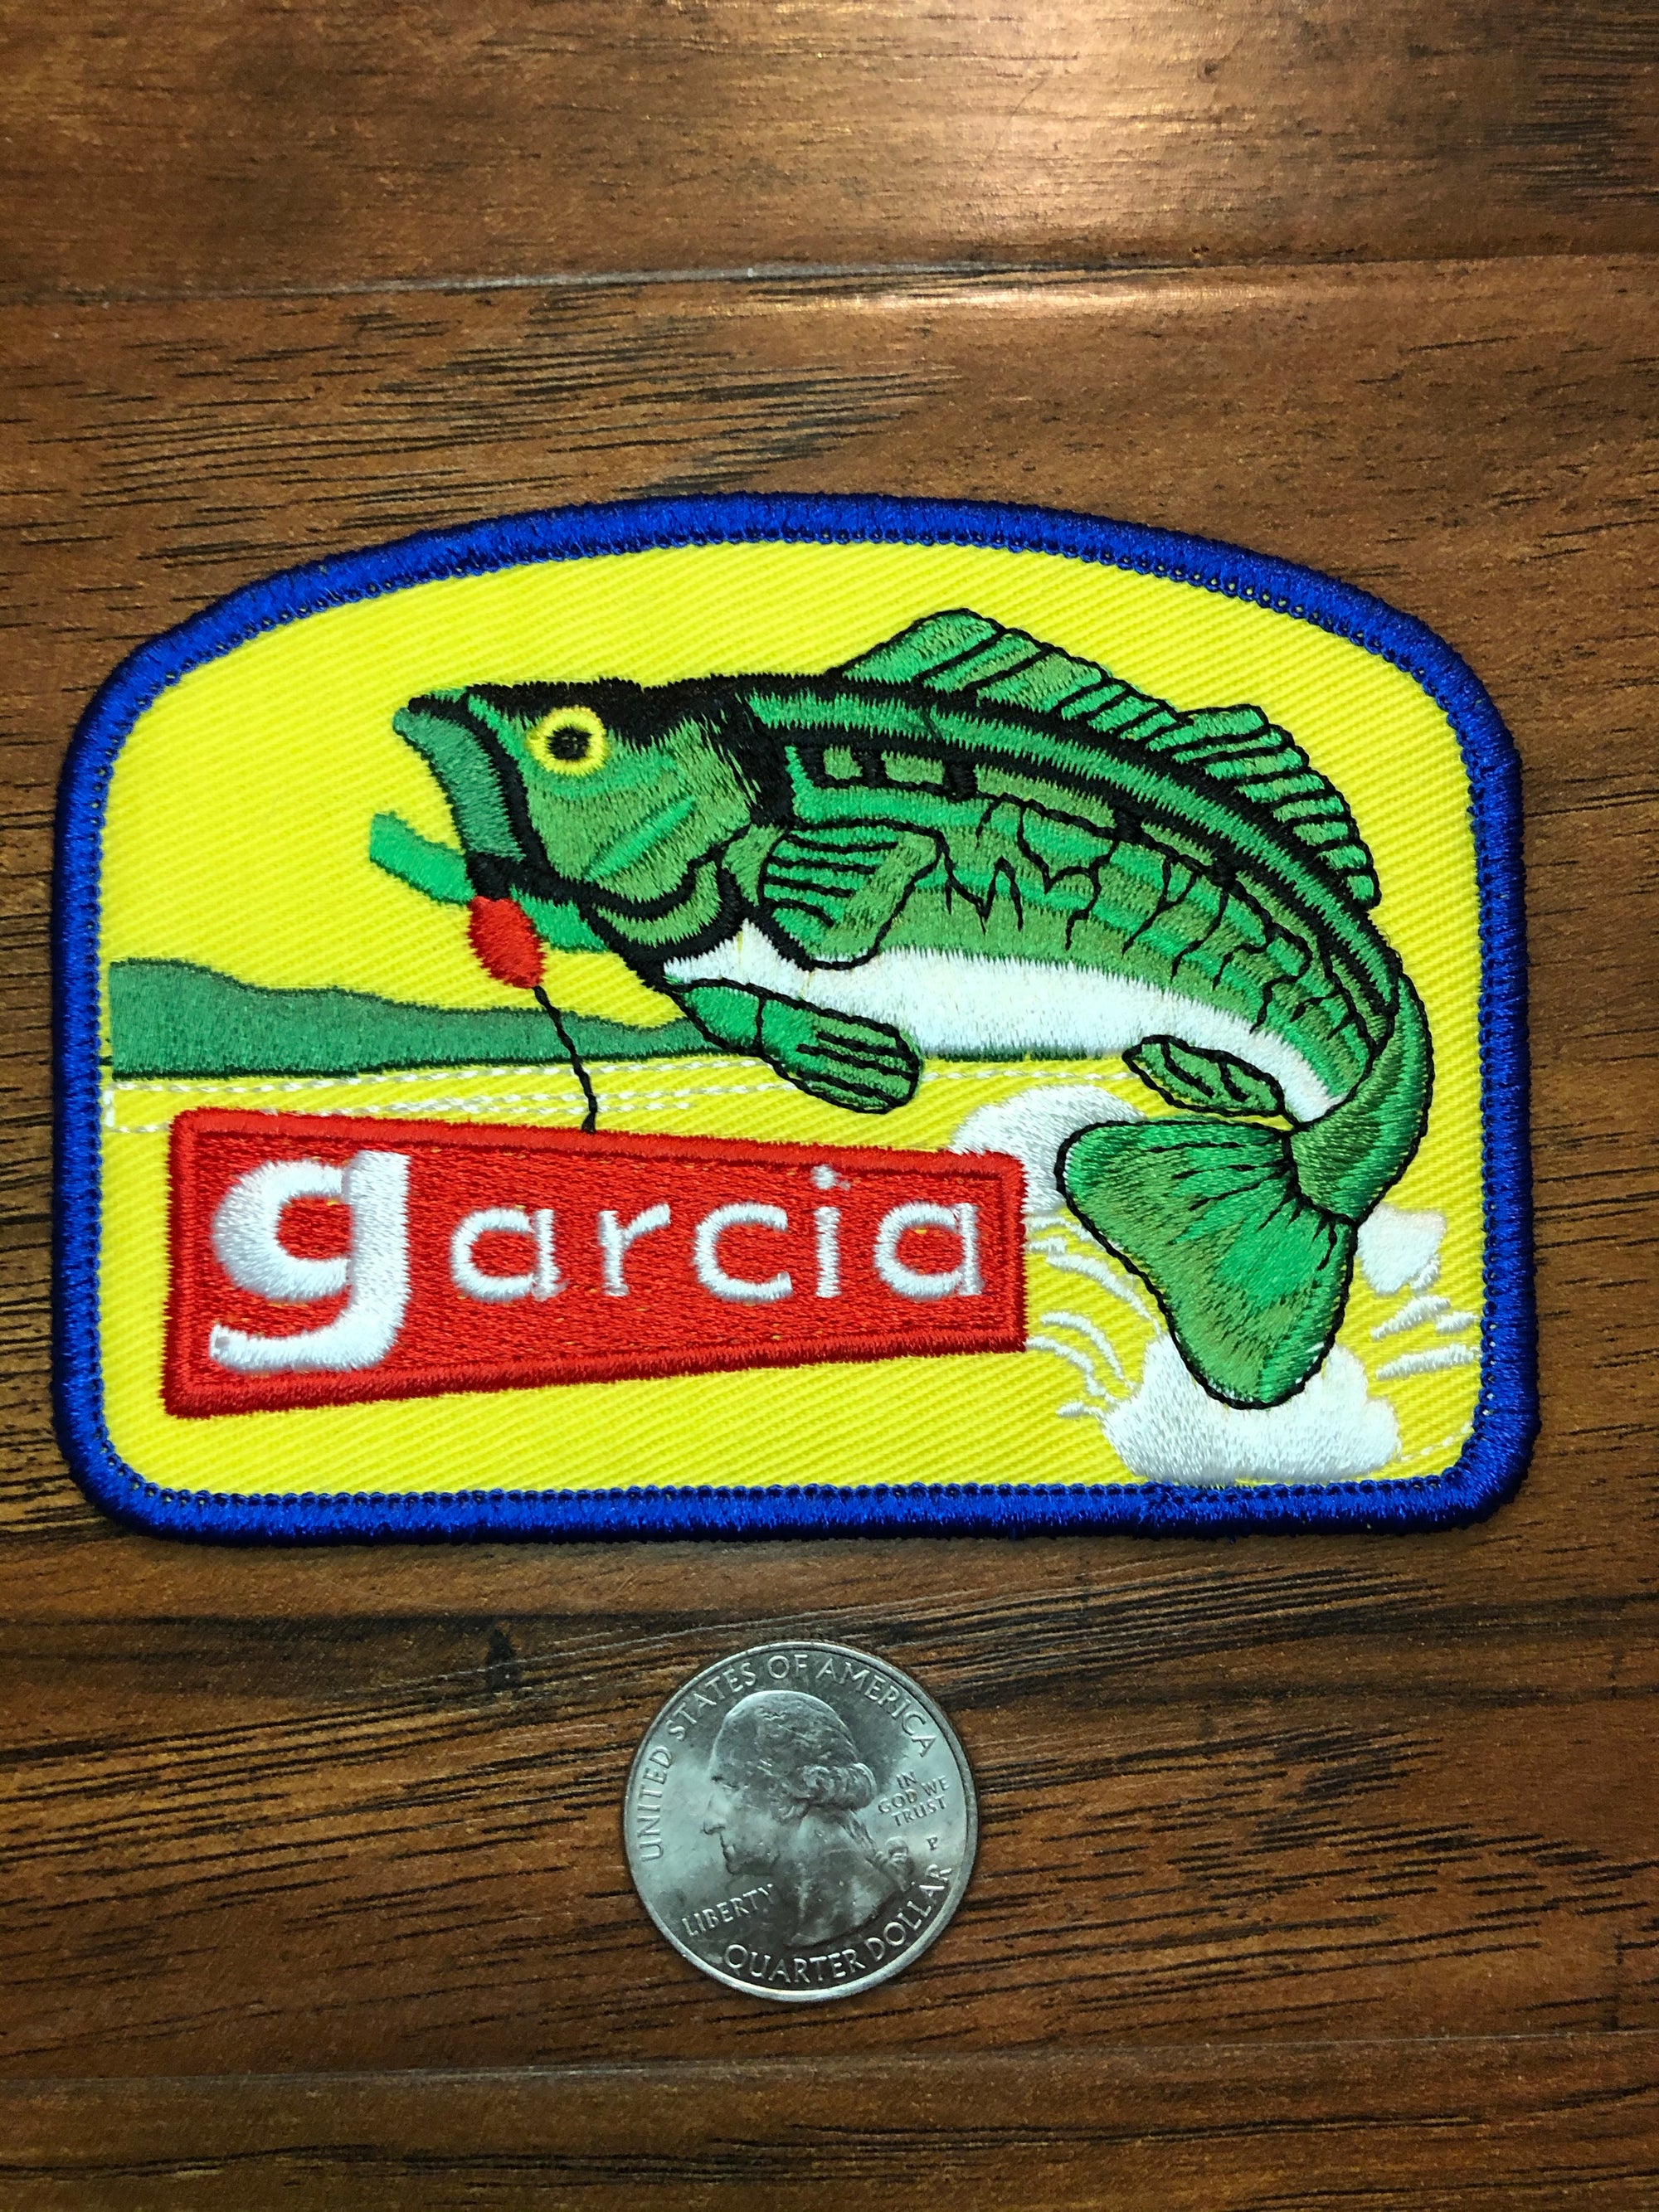 Garcia Fishing